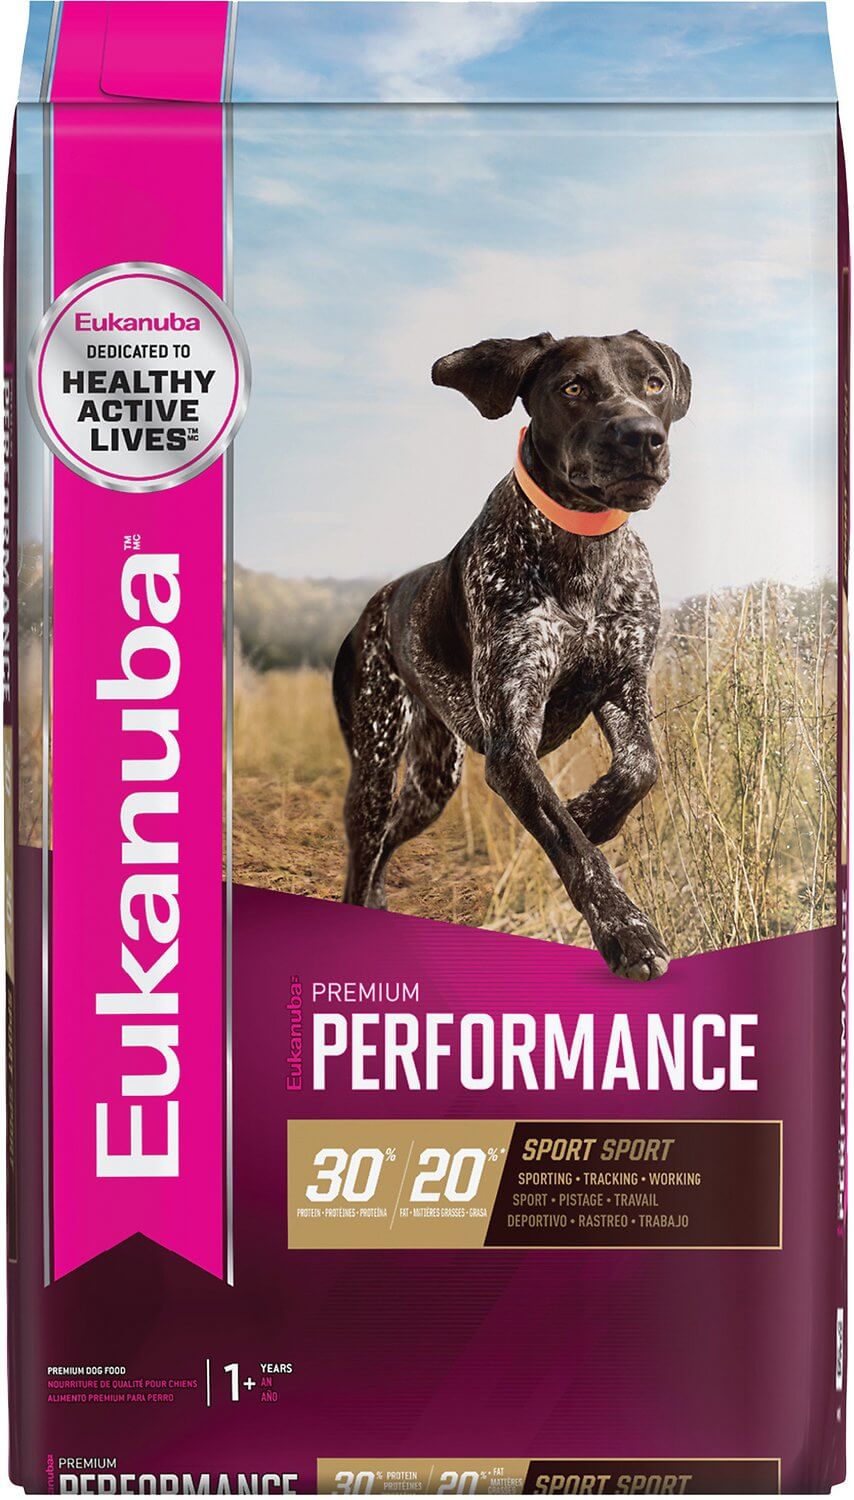 Eukanuba Premium Performance Dog Food Review (Dry)